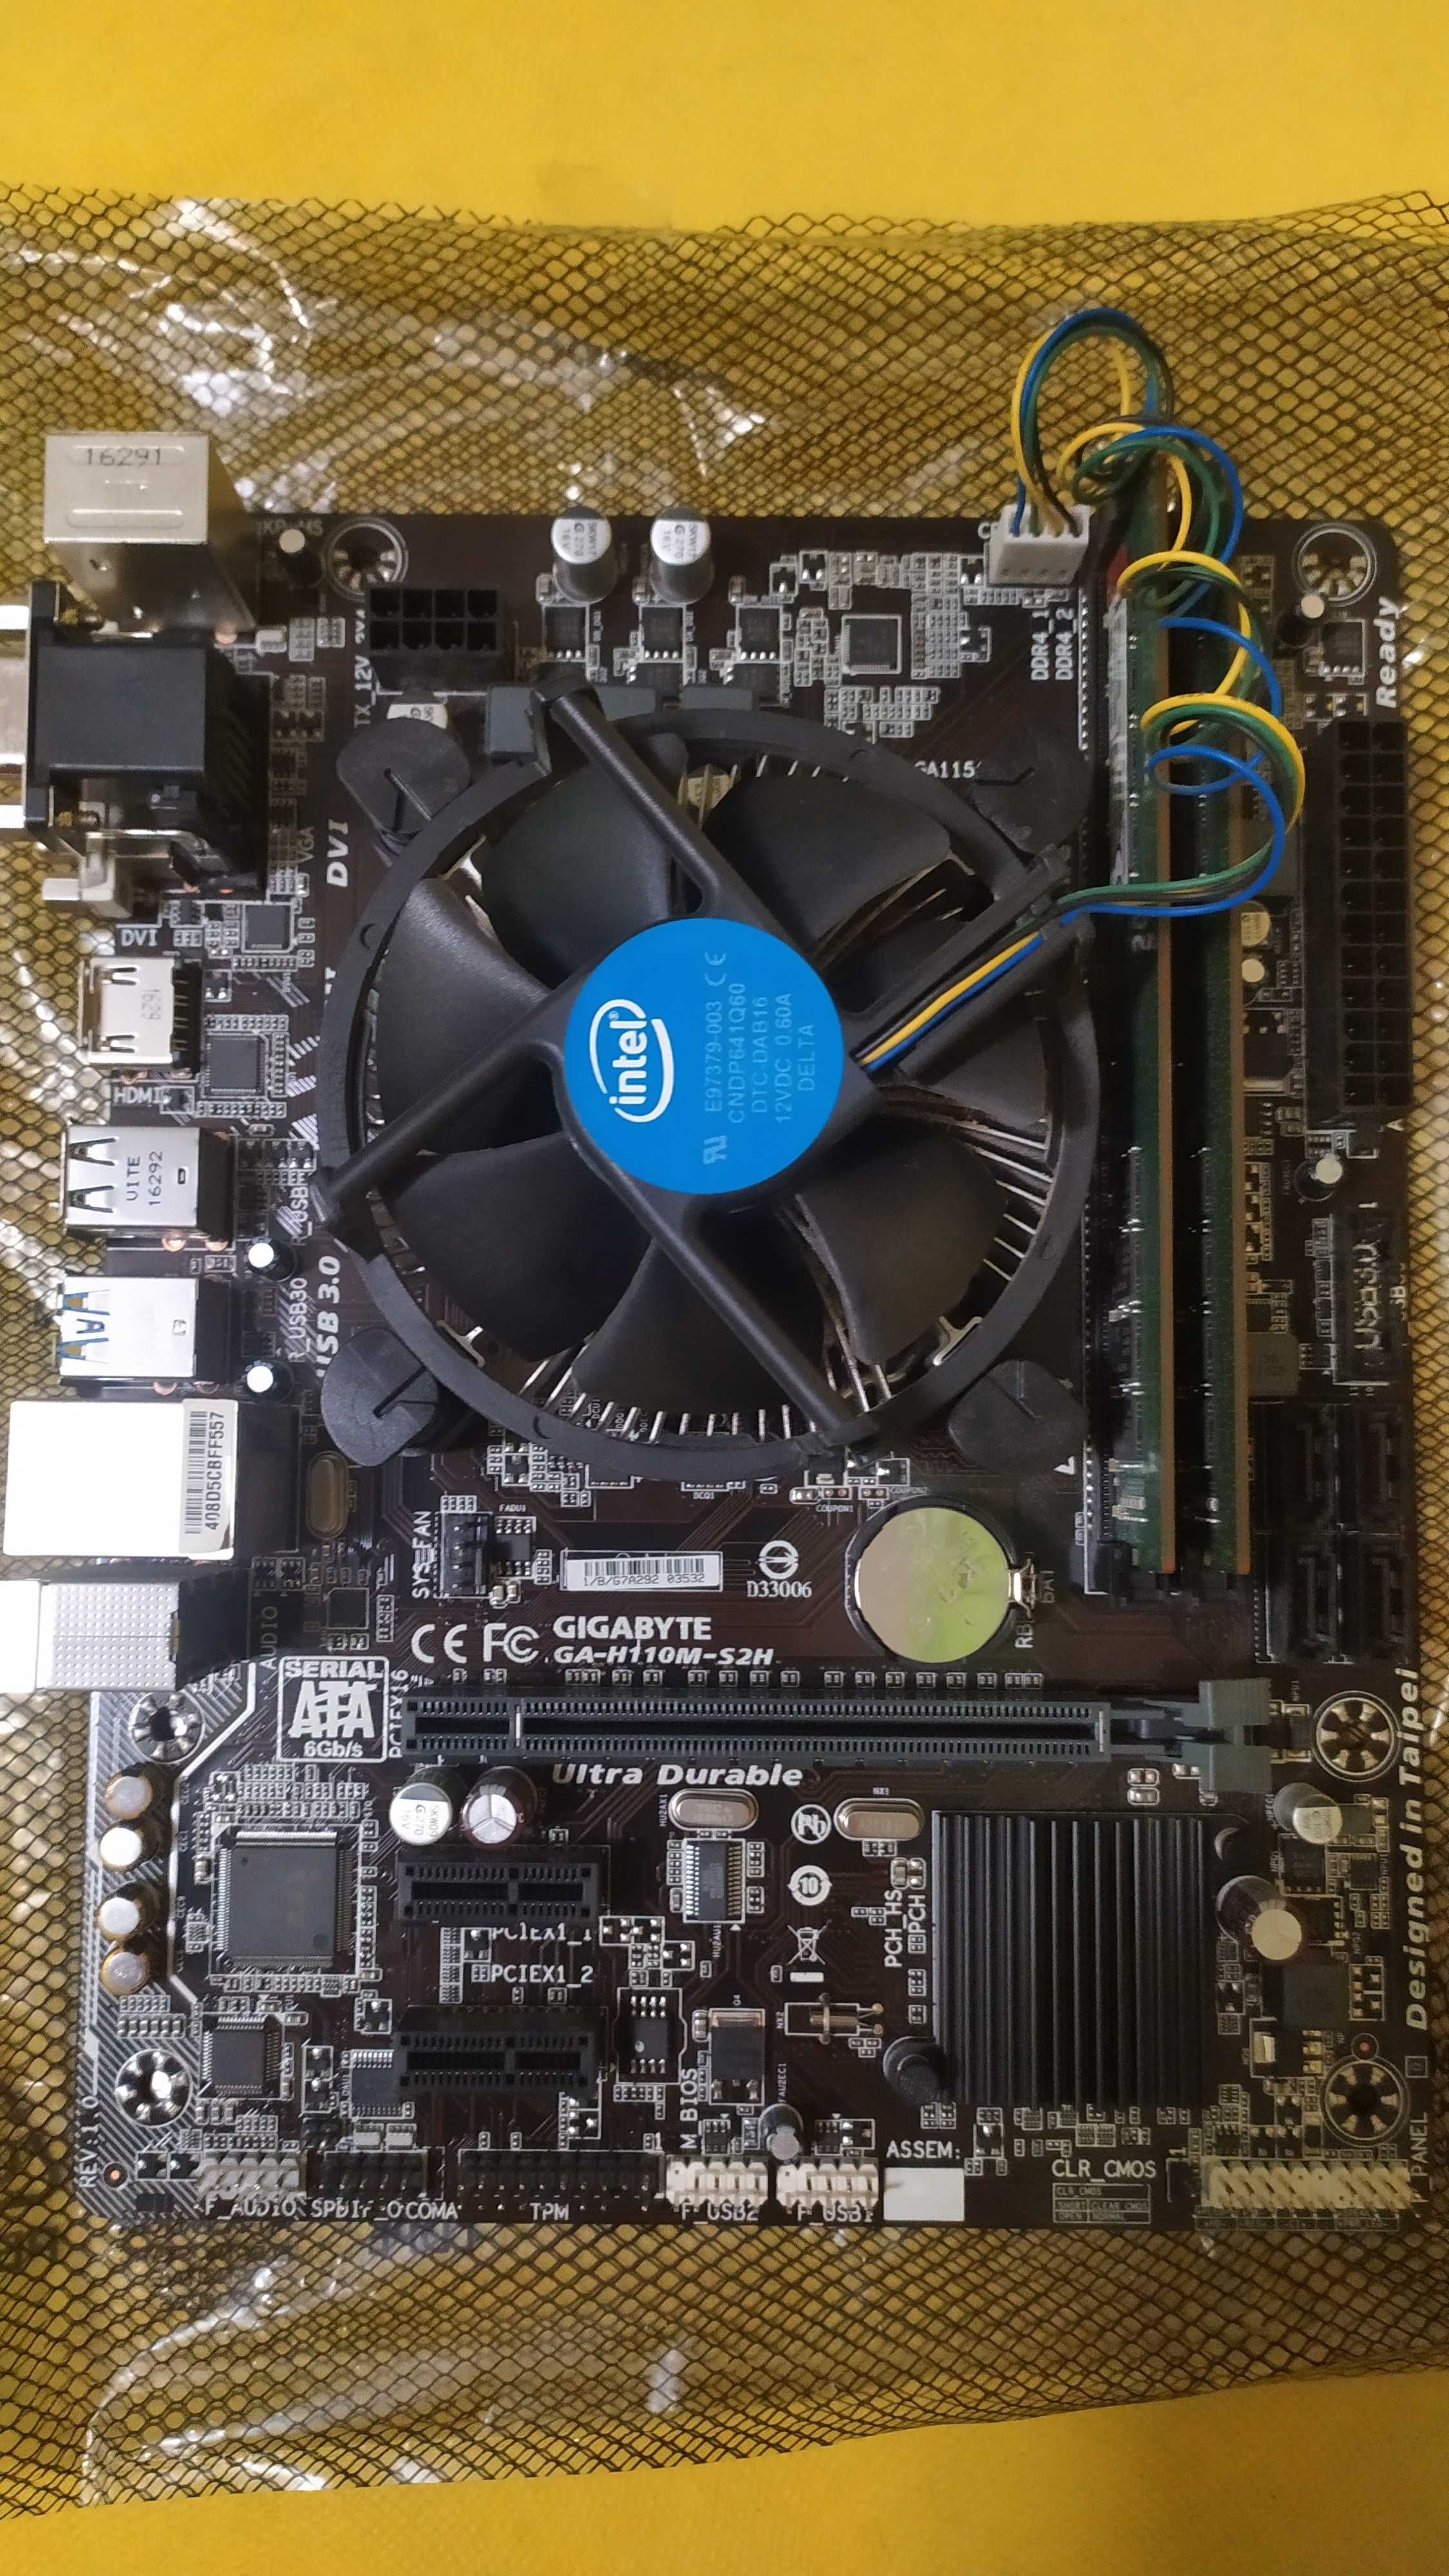 Asus GTX 1050 Ti + Intel Core i3-6100+Gigabyte GA-H110M-S2H